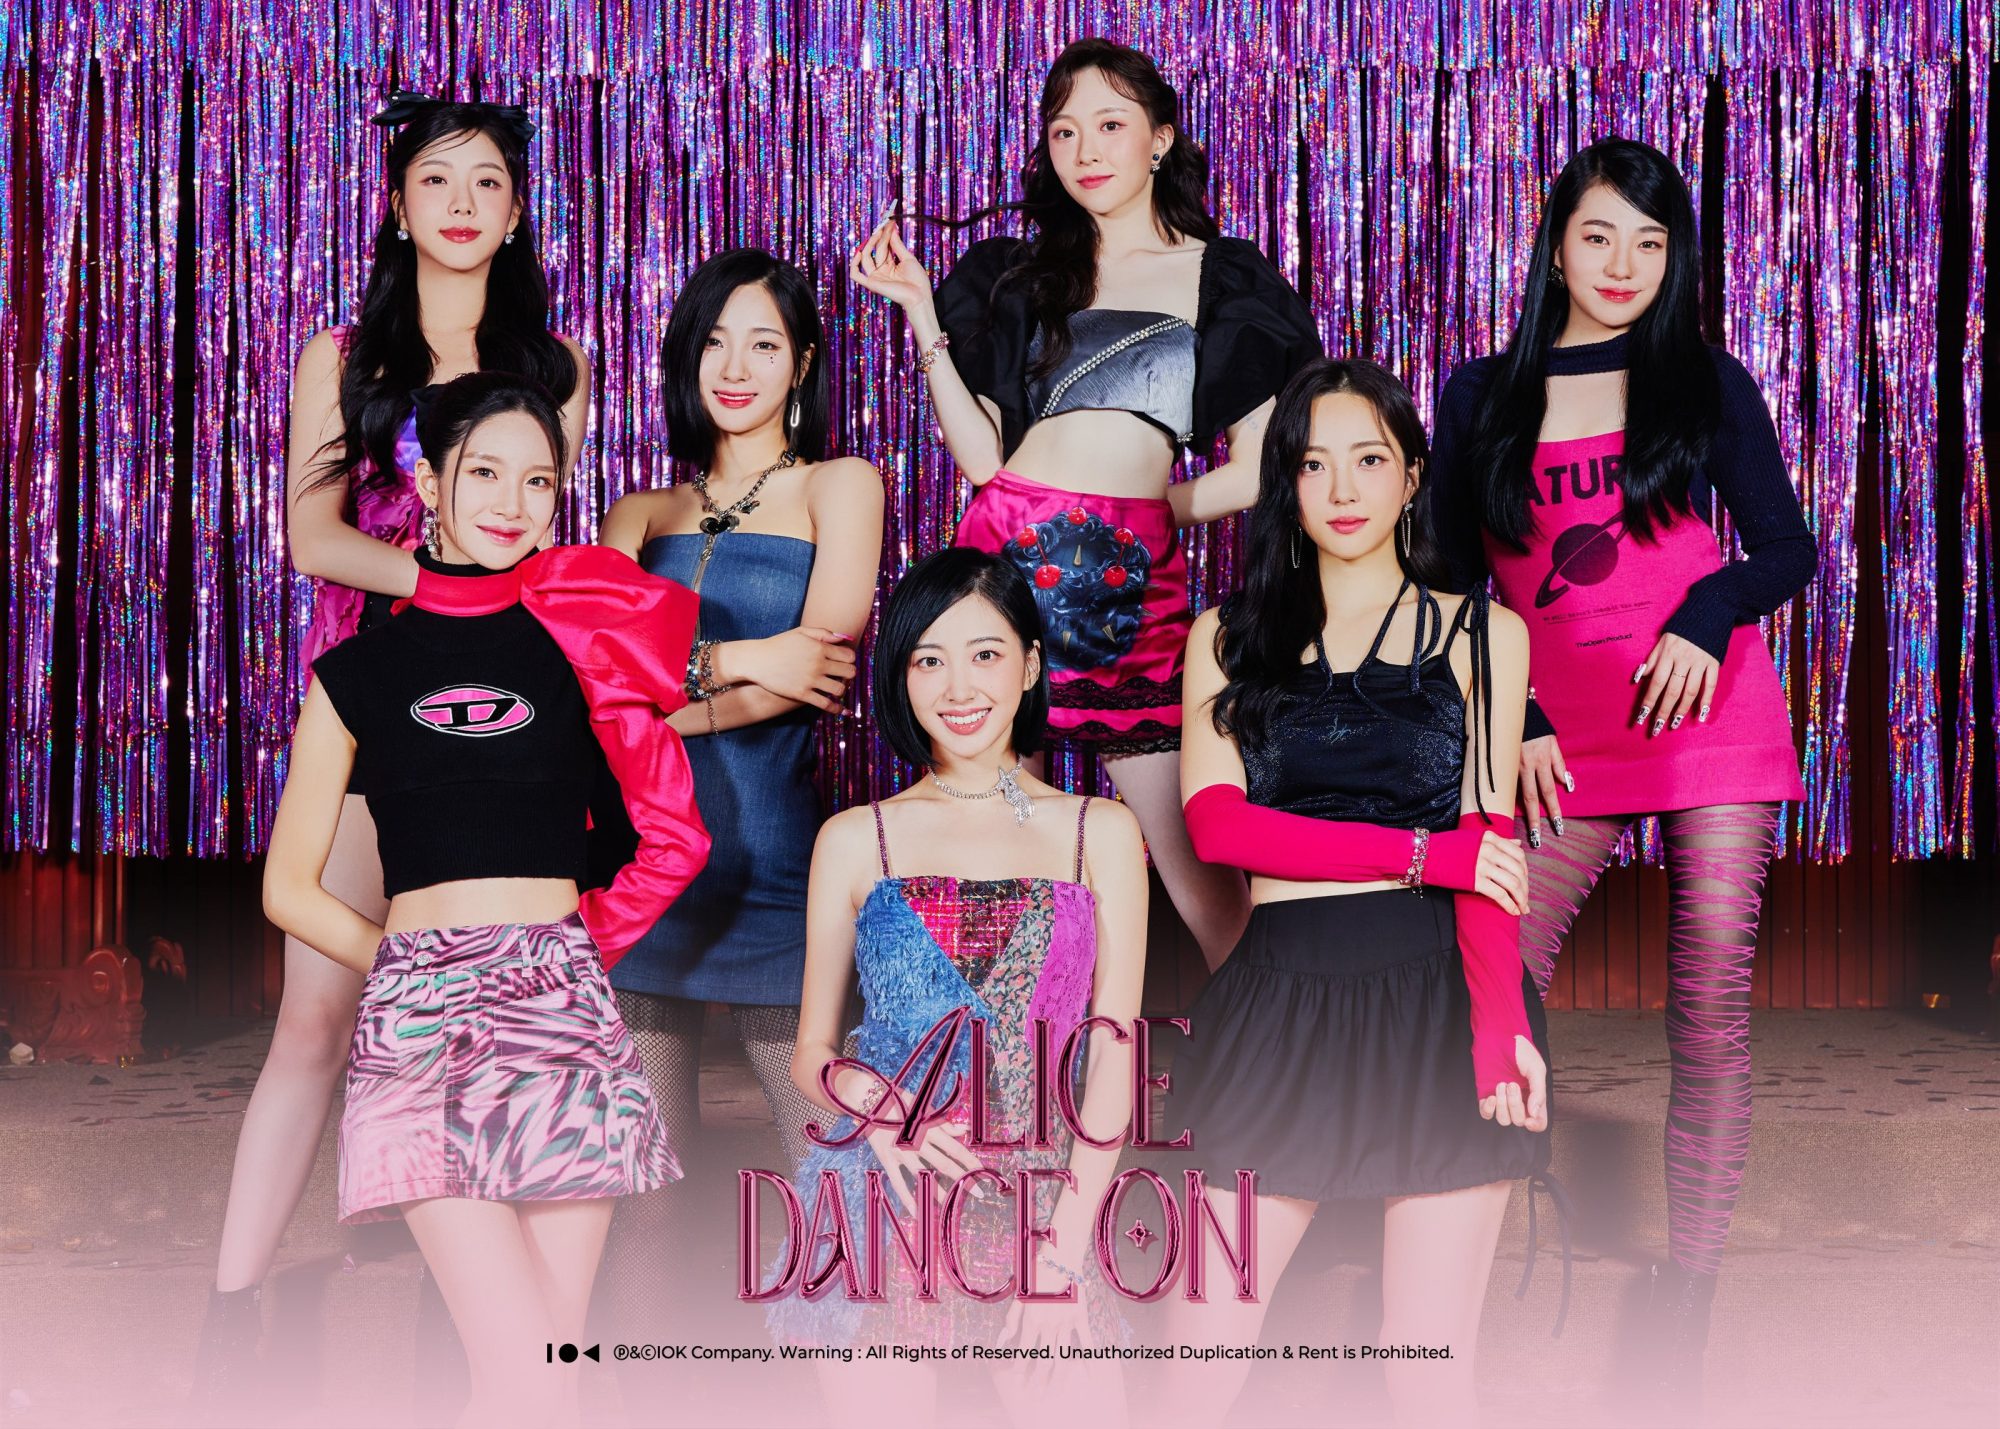 ALICE Dance On Teaser Group